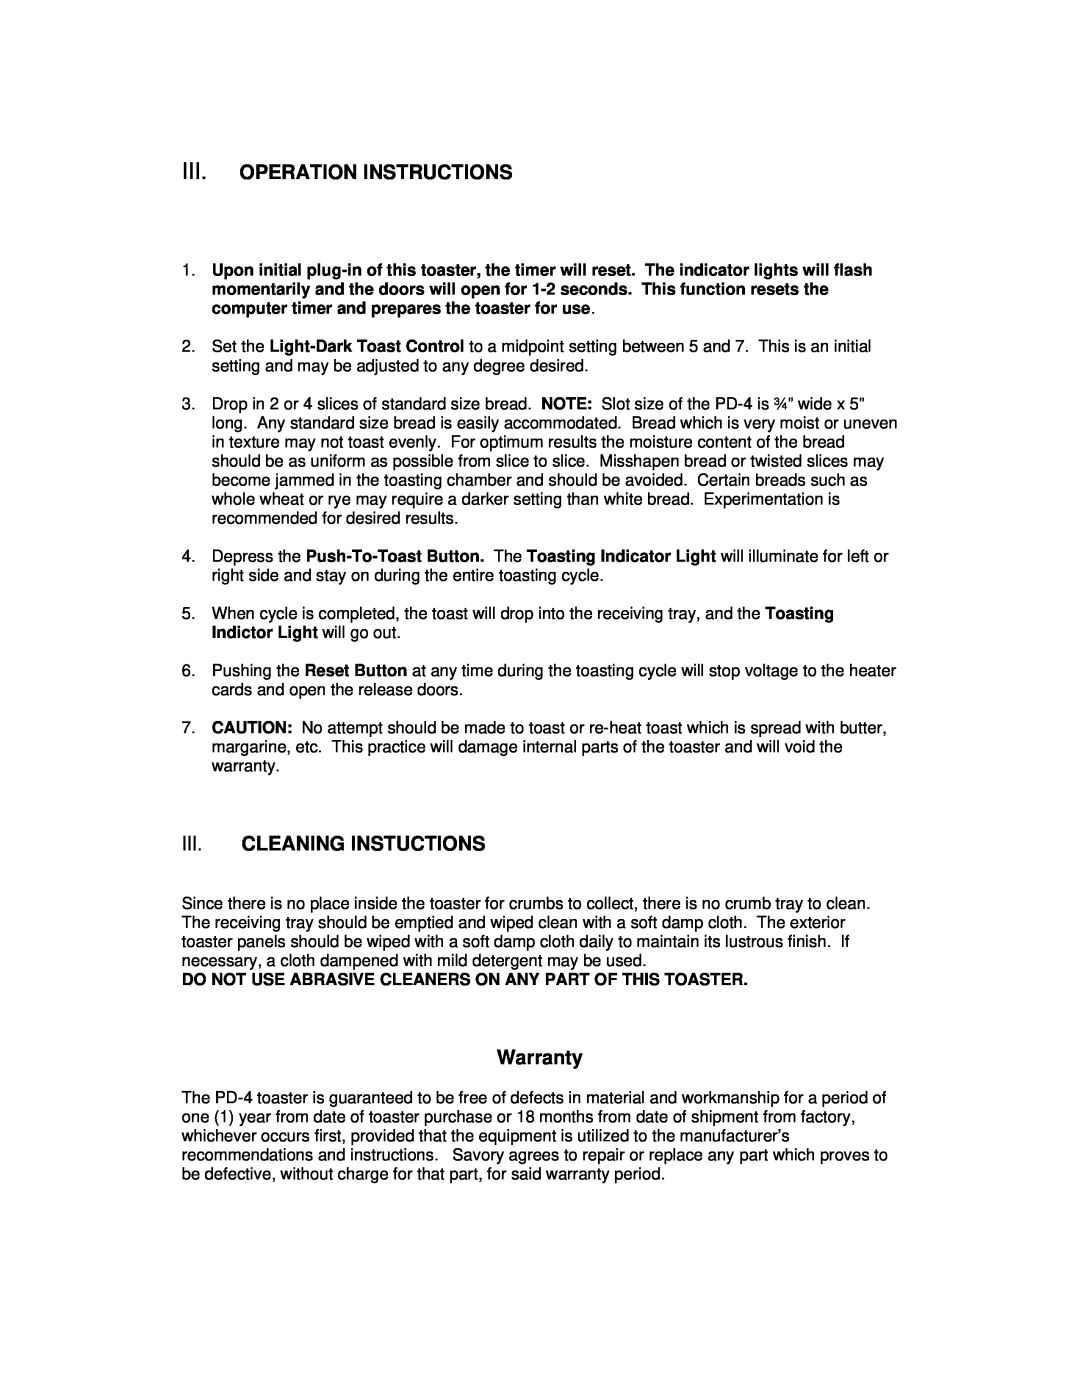 Merco Savory PD-4 instruction manual Iii.Operation Instructions, Iii.Cleaning Instuctions, Warranty 